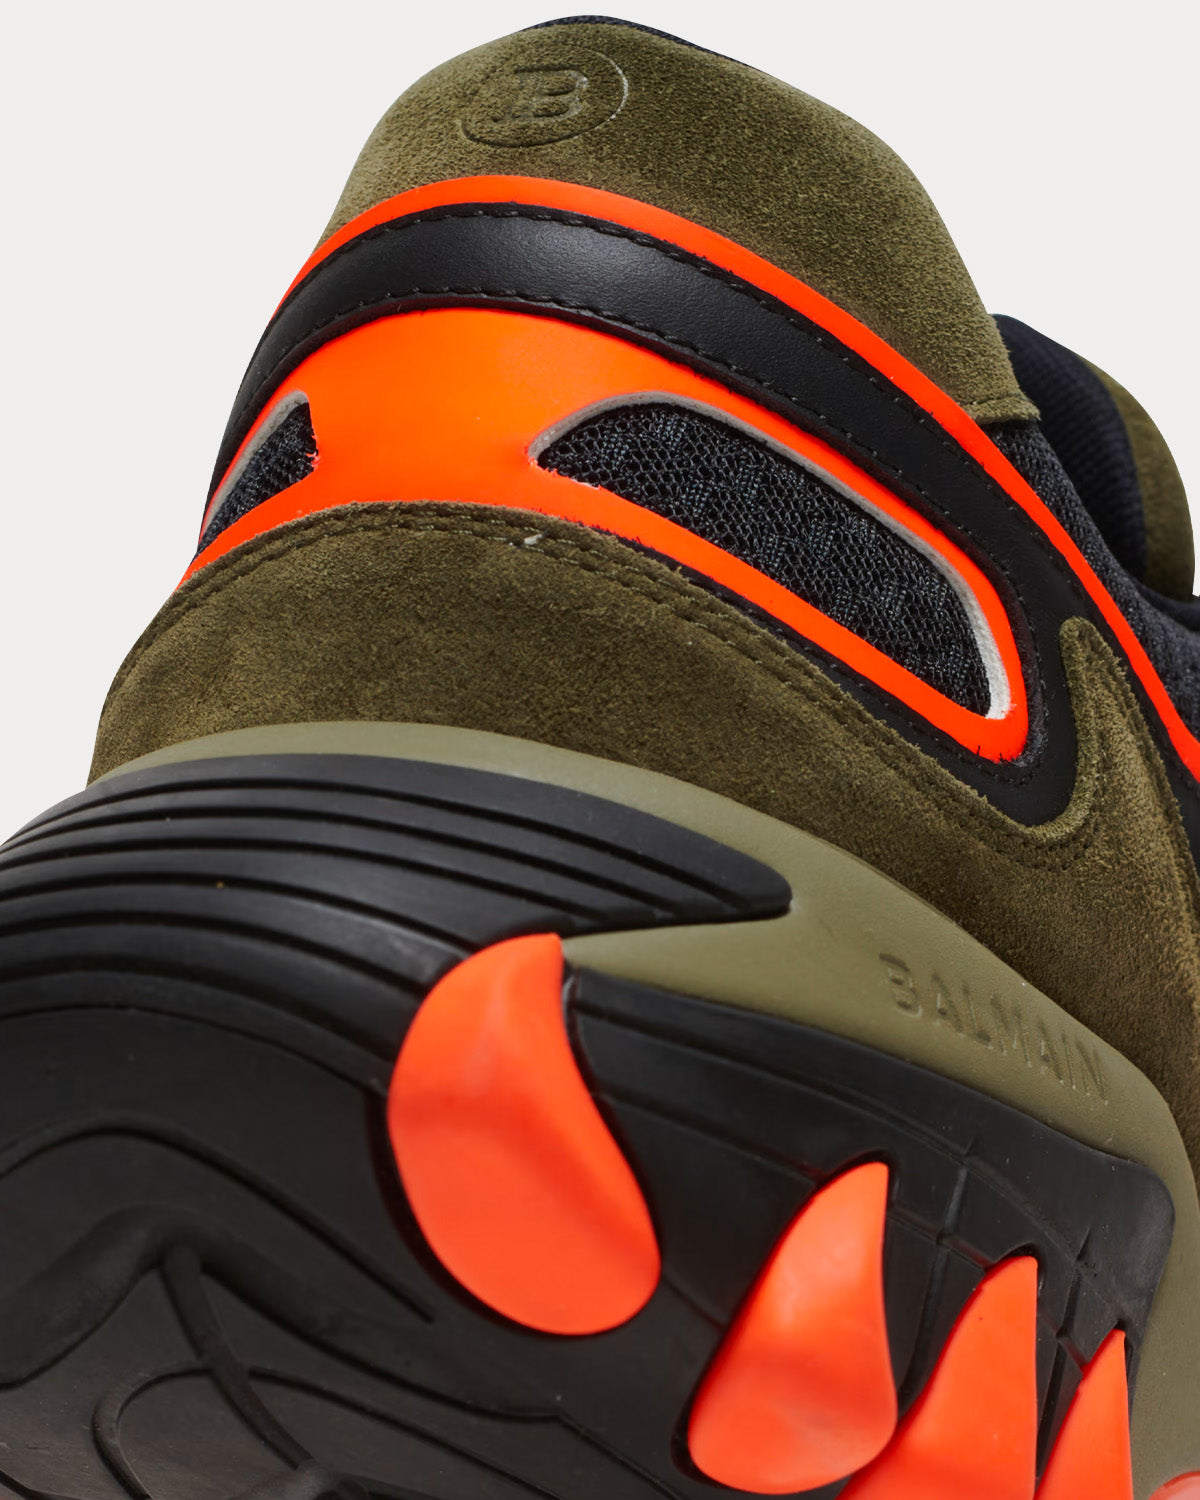 Balmain - B-East Leather, Suede & Mesh Khaki / Orange Low Top Sneakers